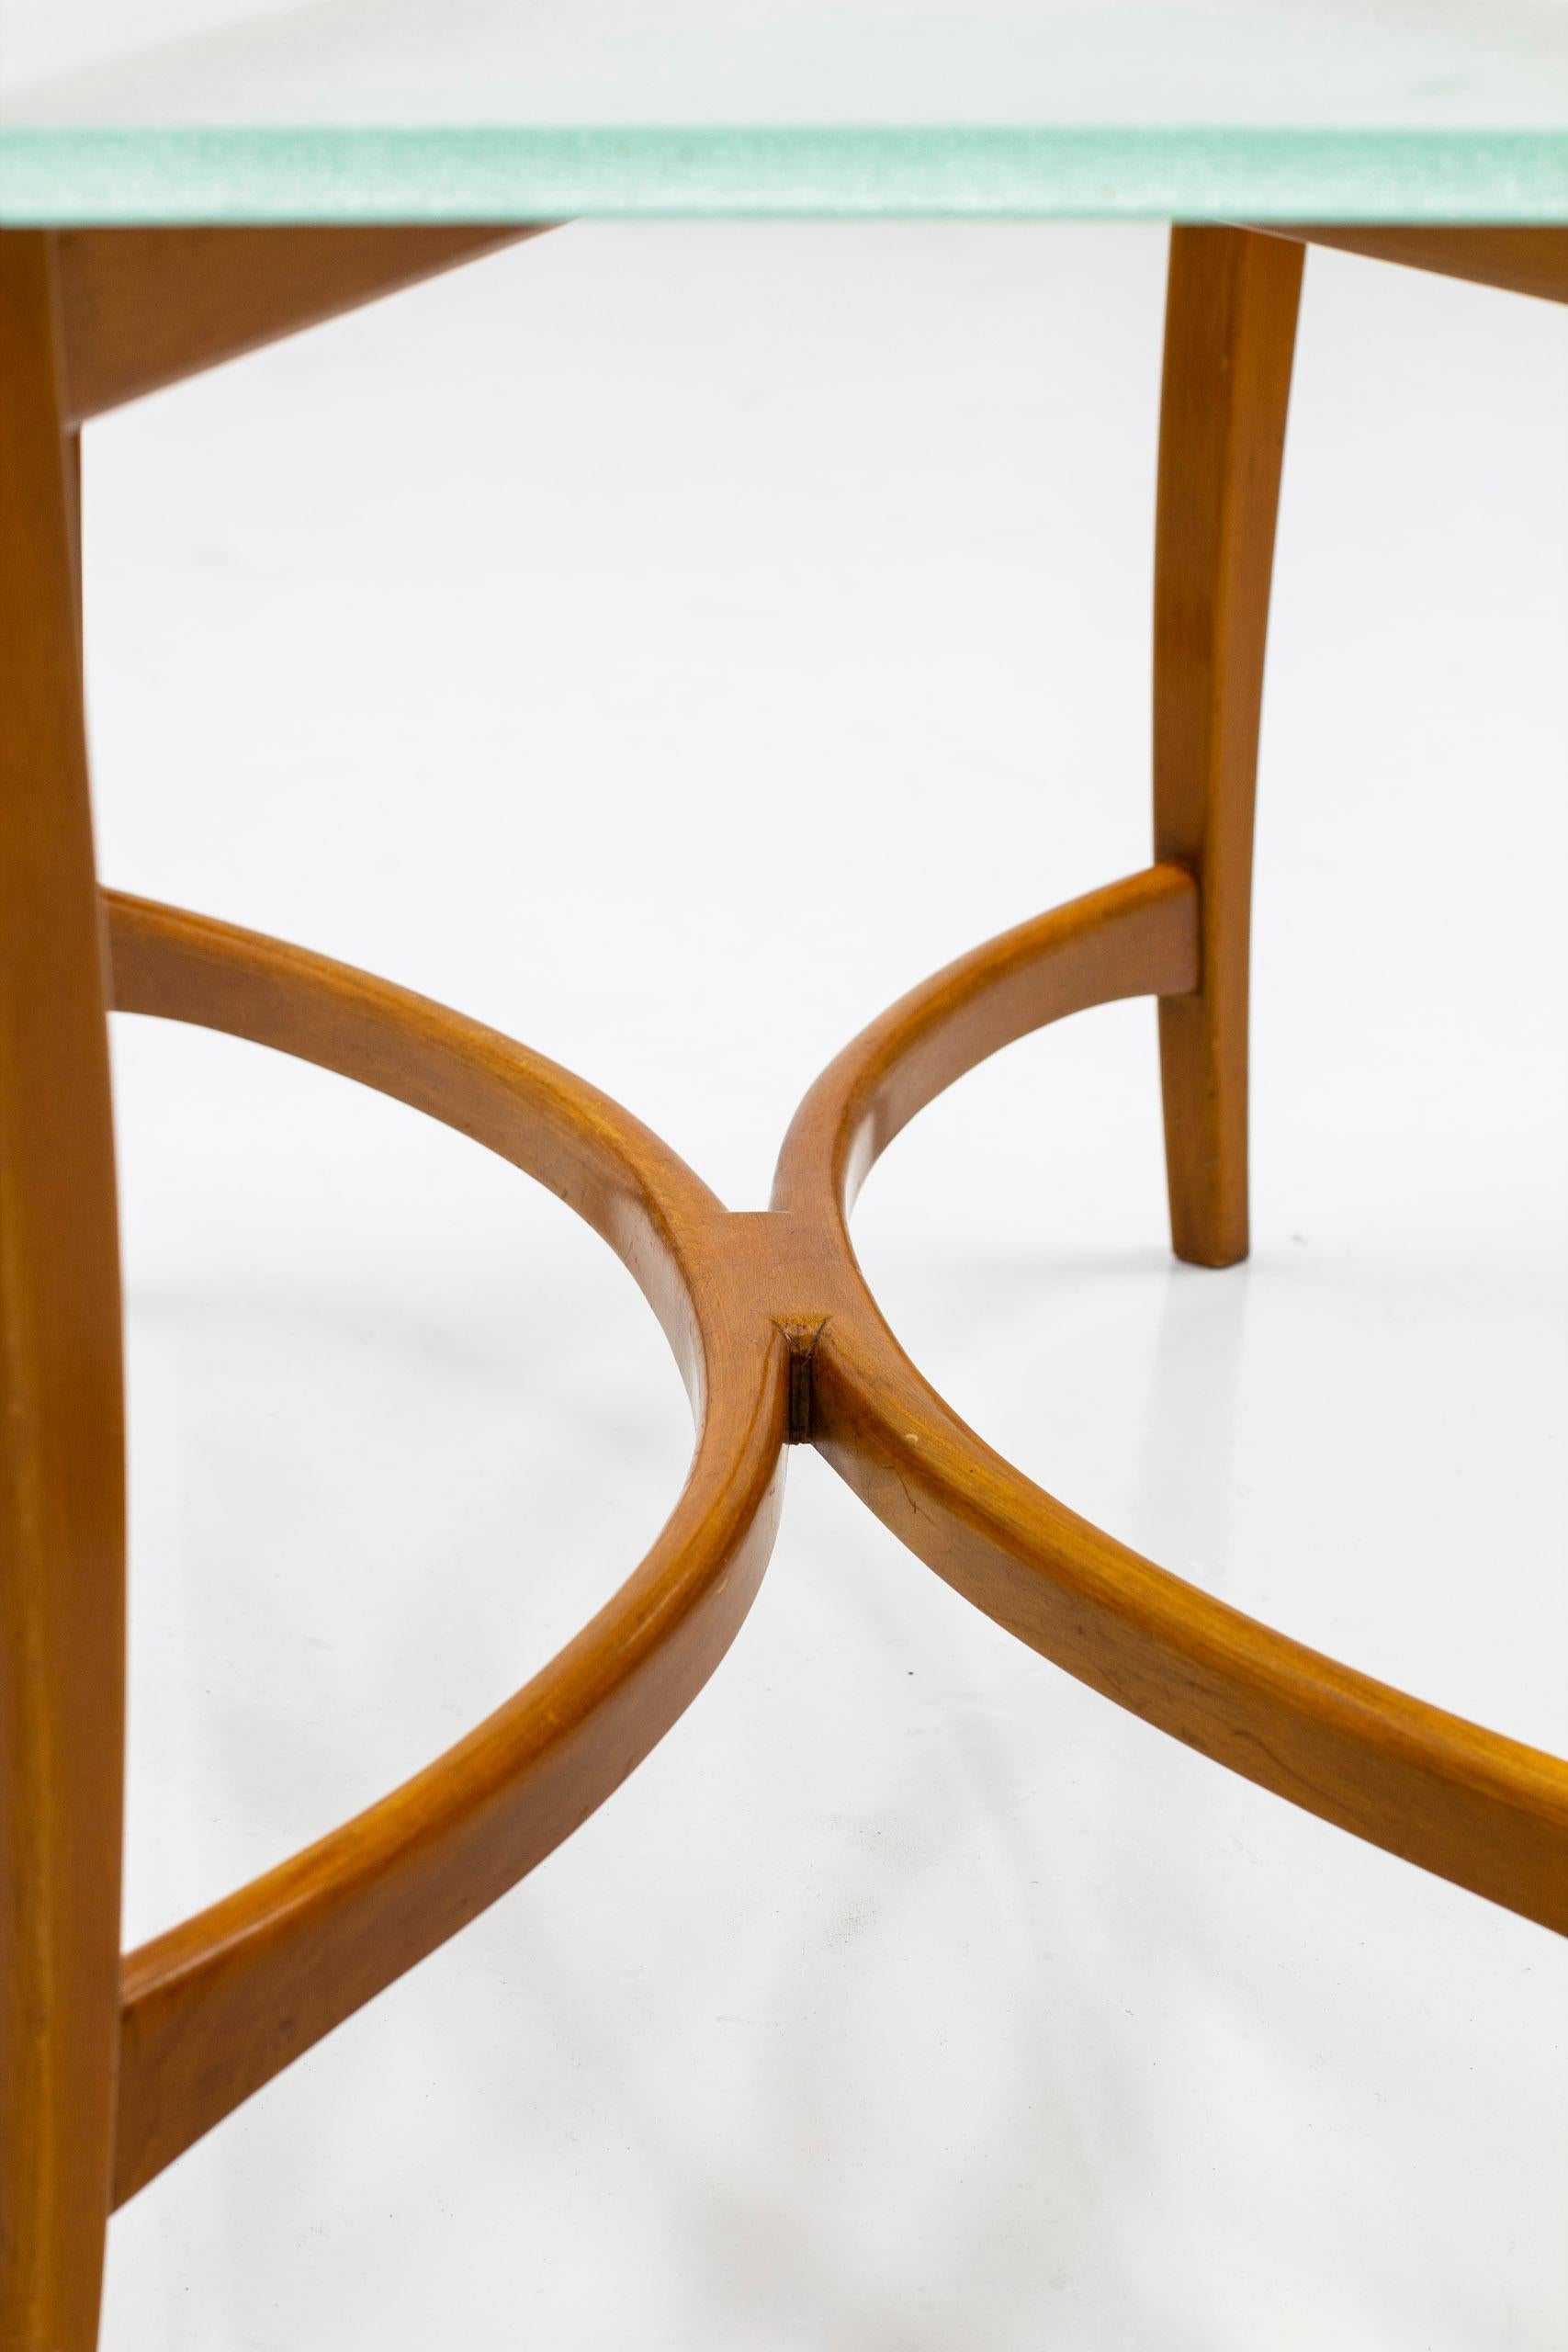 Swedish Modern Wood and Glass Sofa Table by Nordiska Kompaniet, Sweden, 1939 For Sale 3